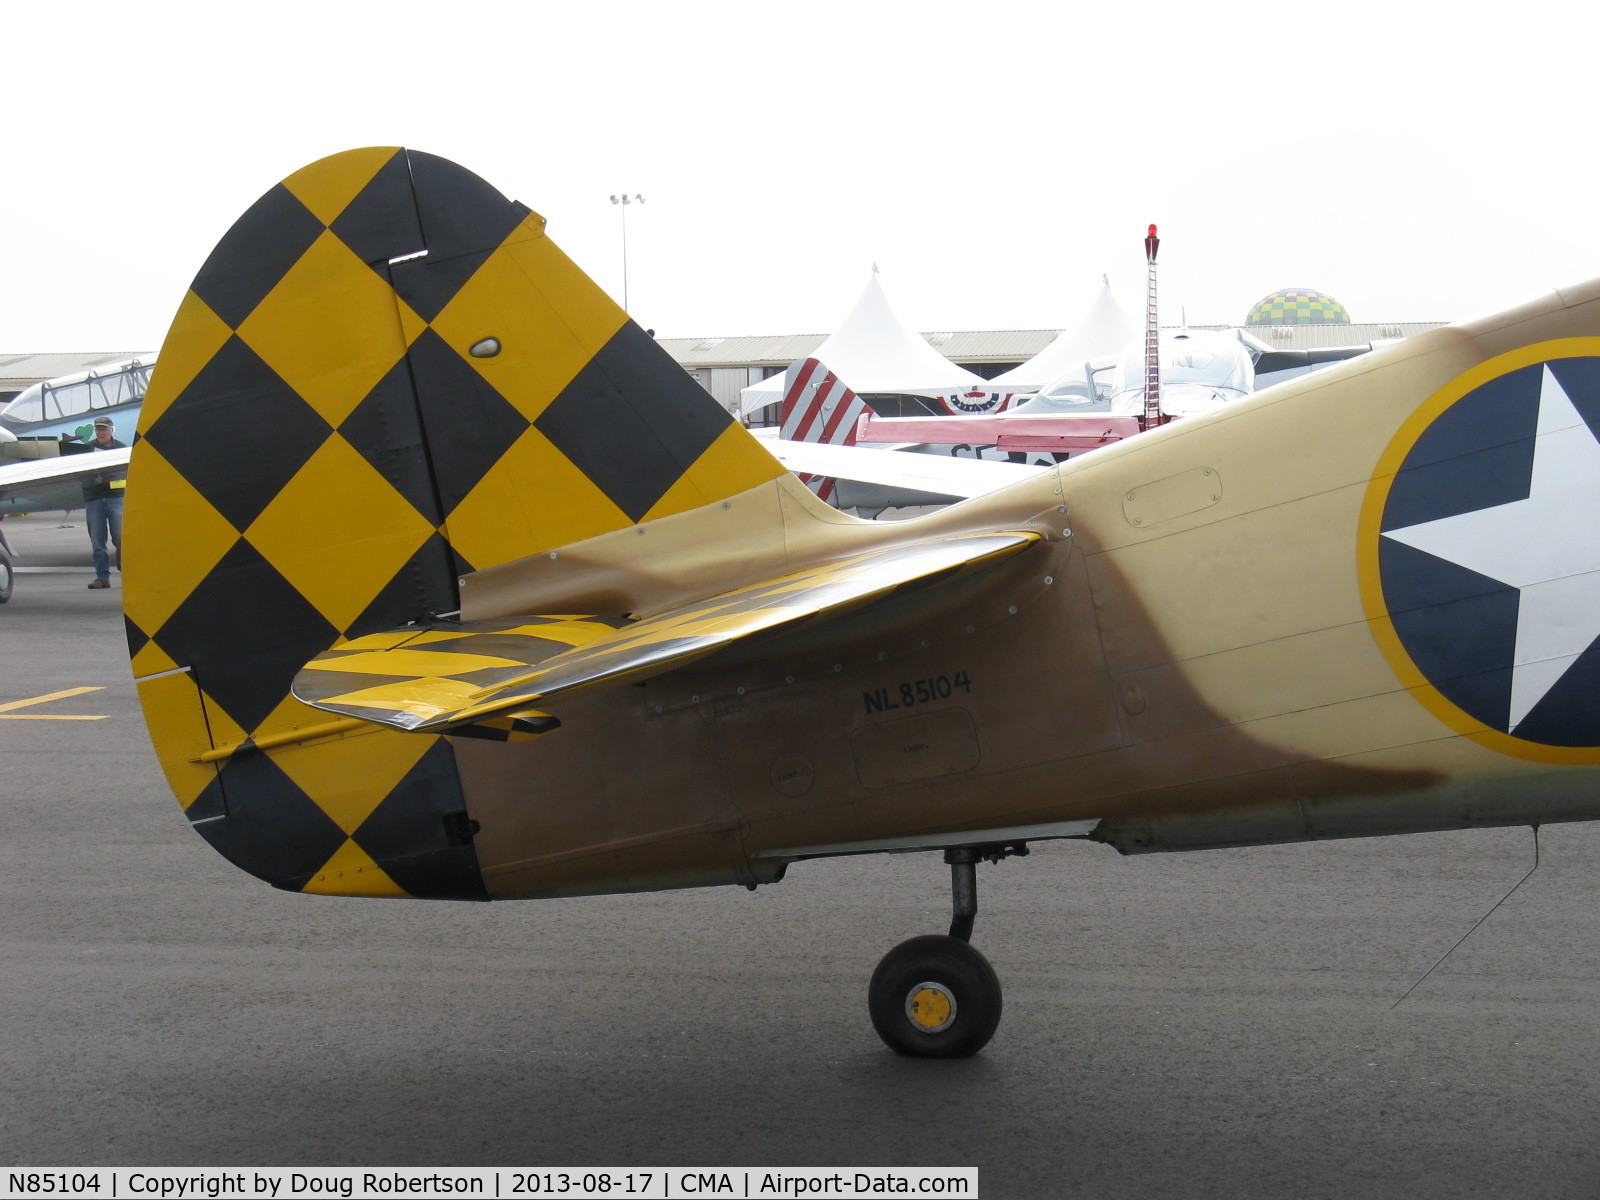 N85104, Curtiss P-40N-5CU Kittyhawk C/N 28954/F858, Curtiss-Wright/Maloney P-40N KITTYHAWK, Allison V-1710-81 1,360 Hp, checkerboard tail, Limited class